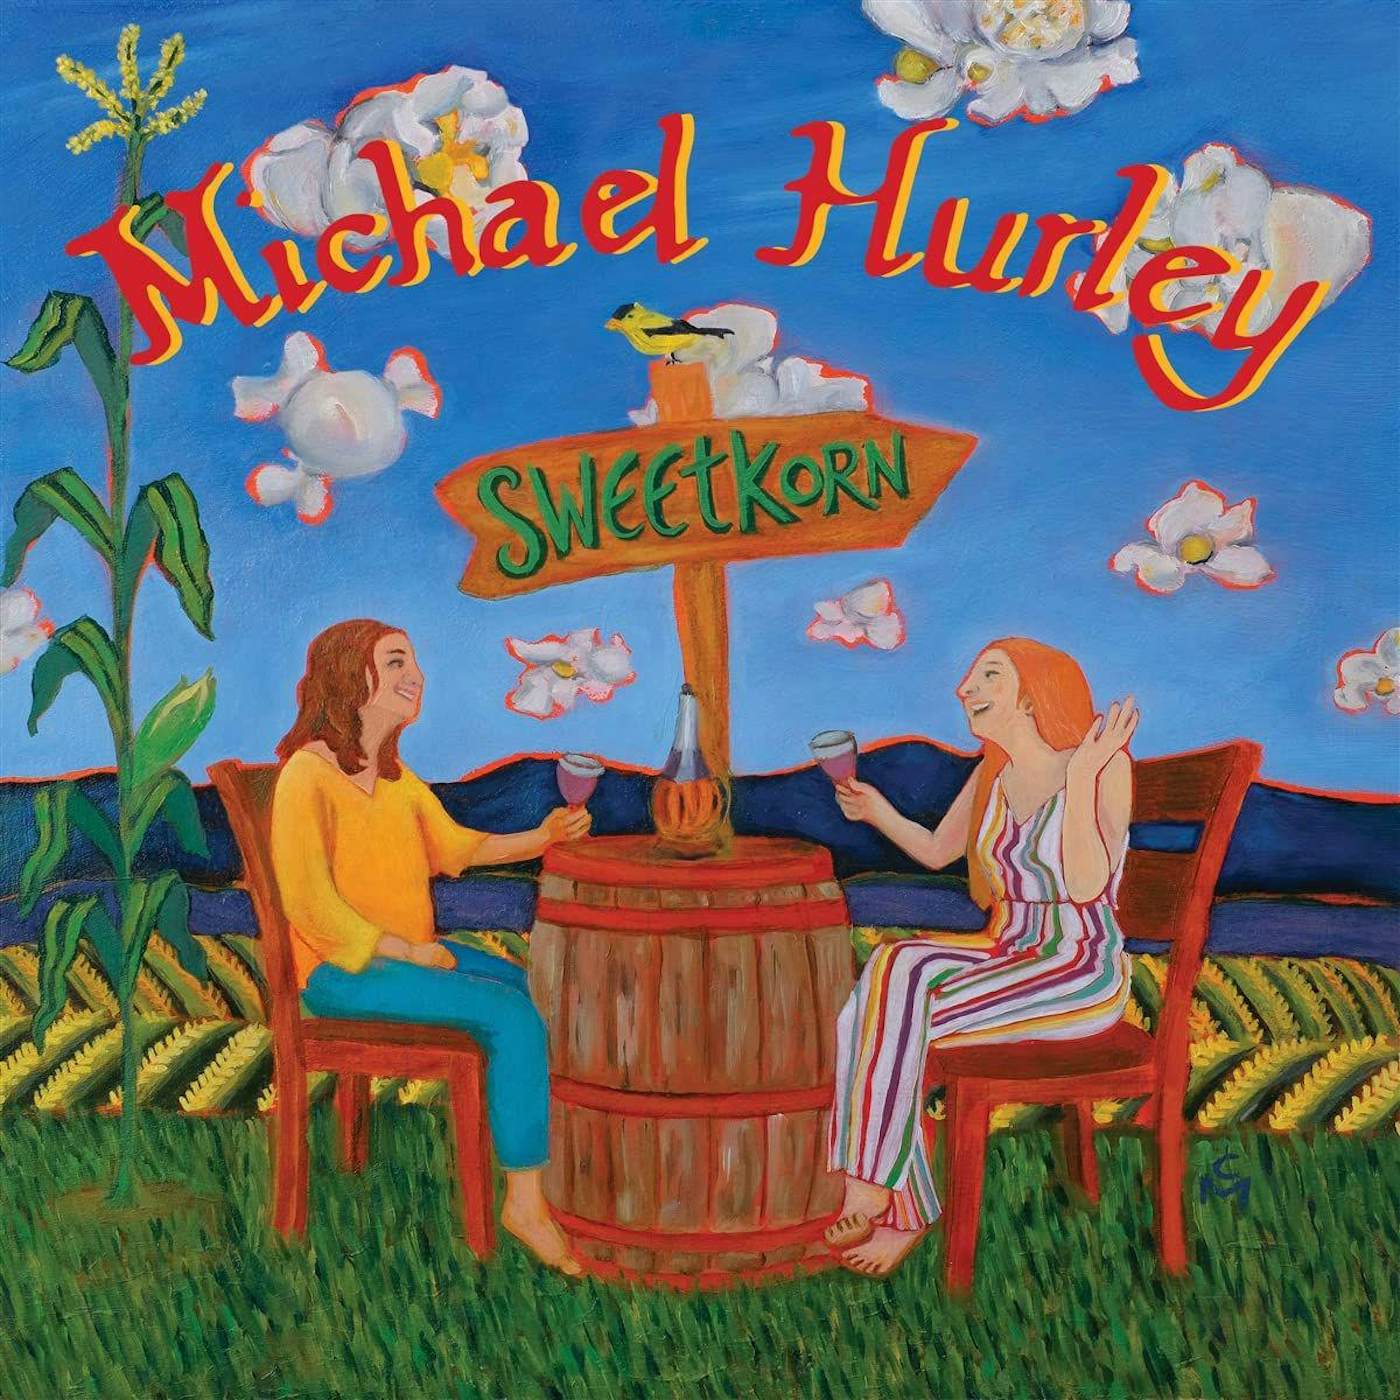 Michael Hurley Sweetkorn Vinyl Record